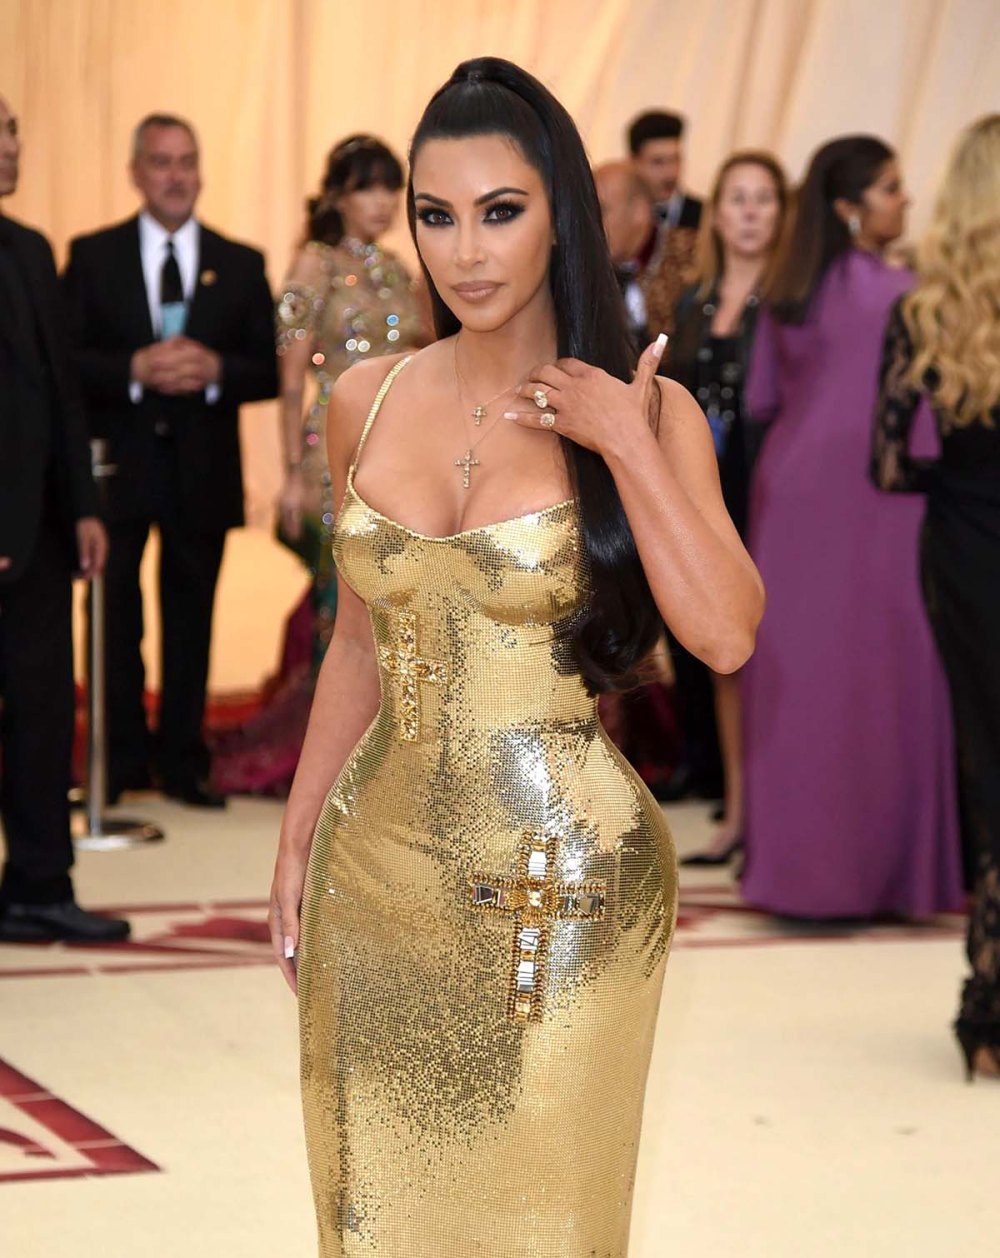 Kim Kardashian Was 'Proud' When Designers Made 'Curvy' Clothes